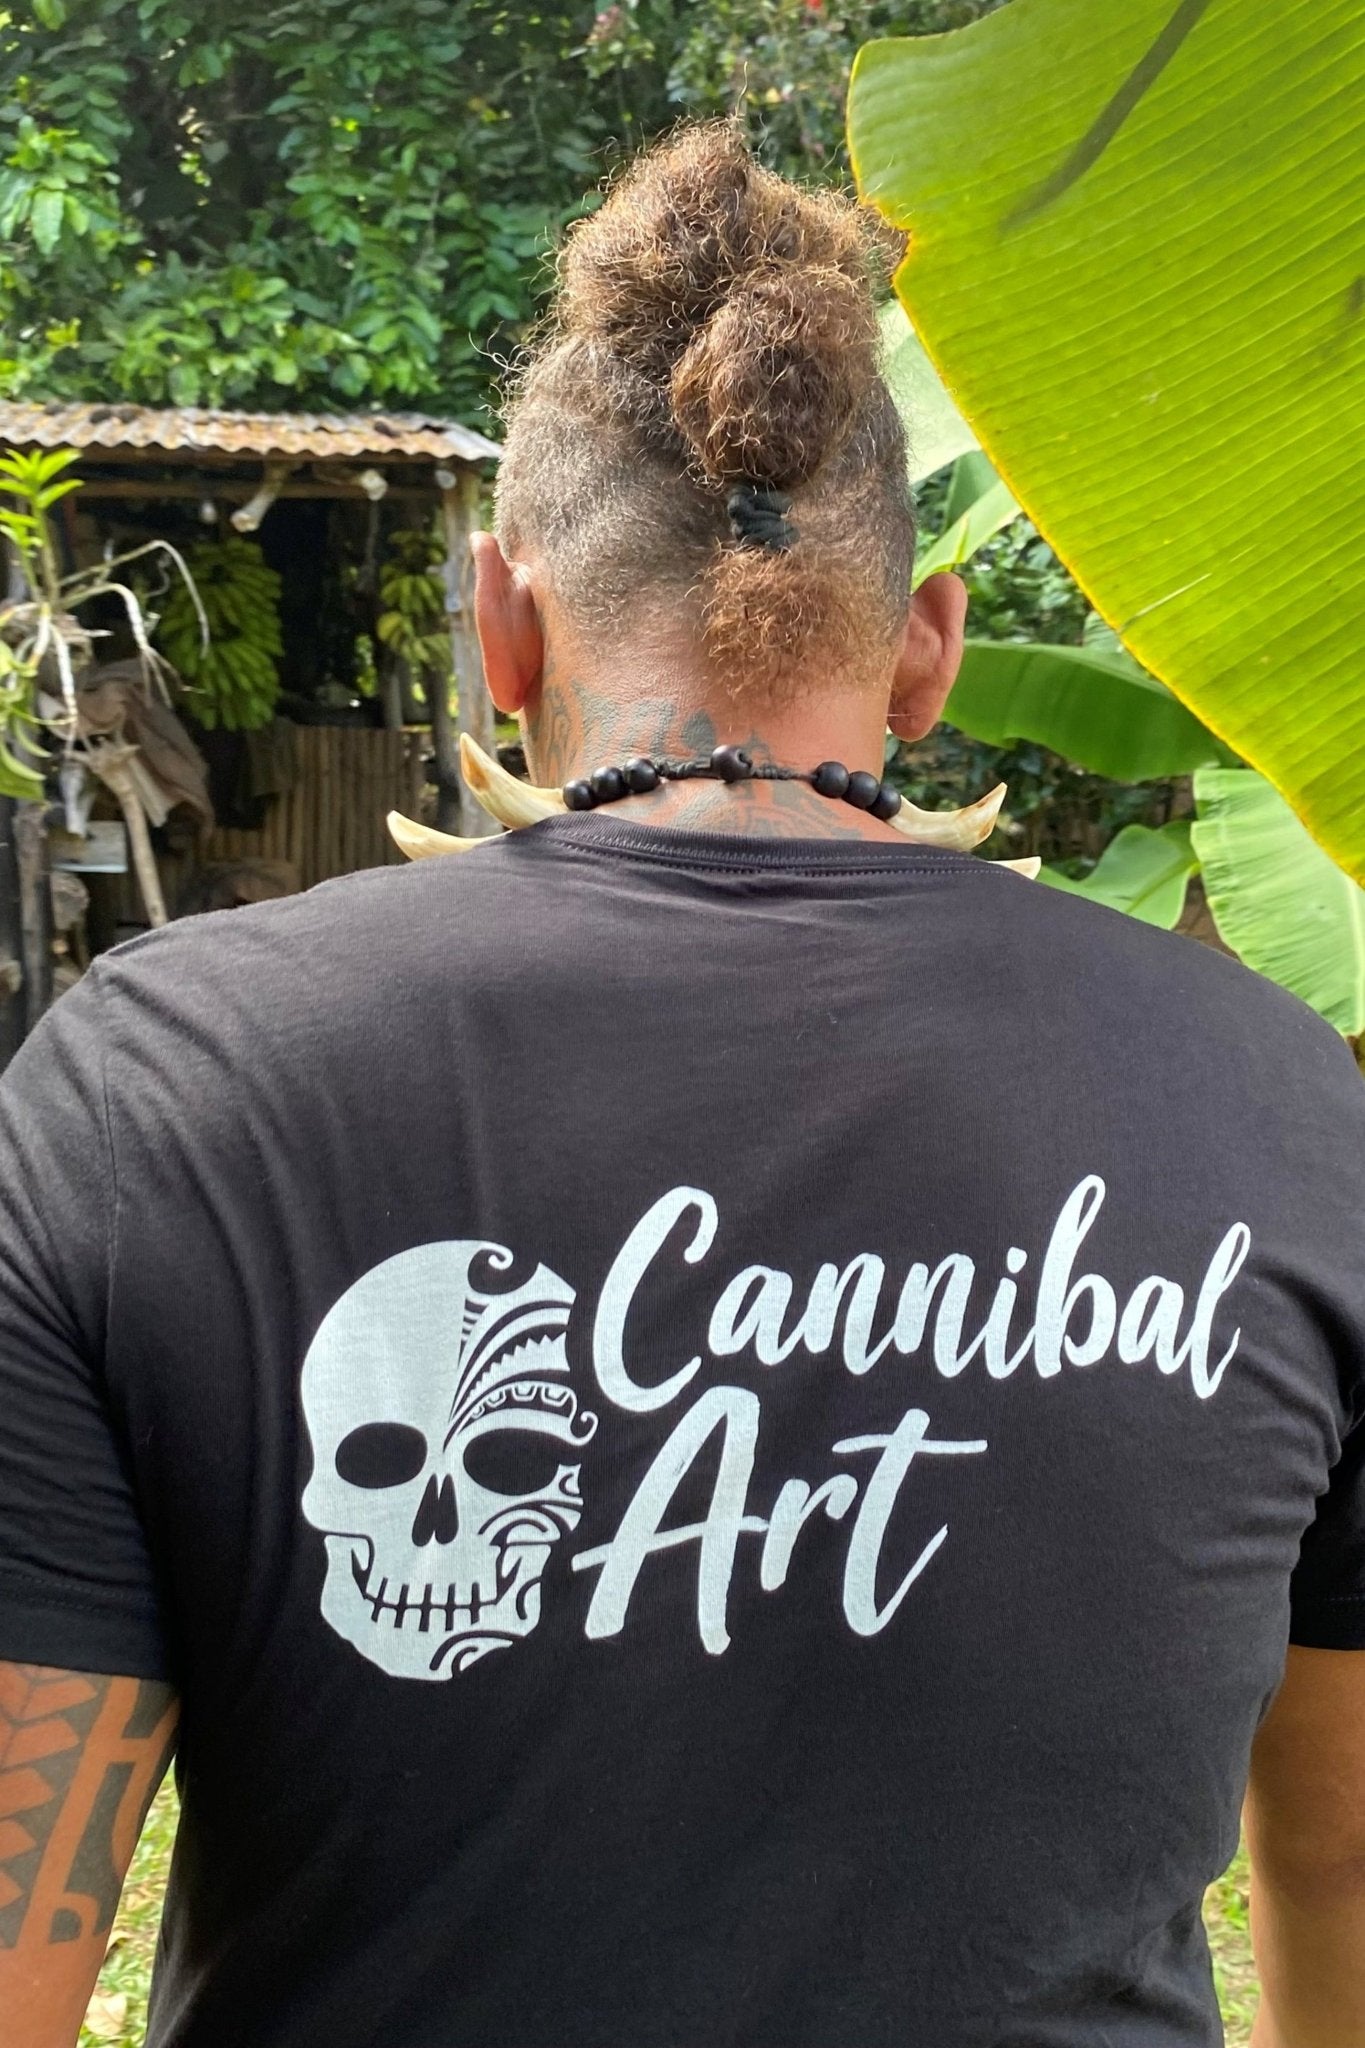 Cannibal Art / Nuku Hiva t-shirt - Cannibal Art